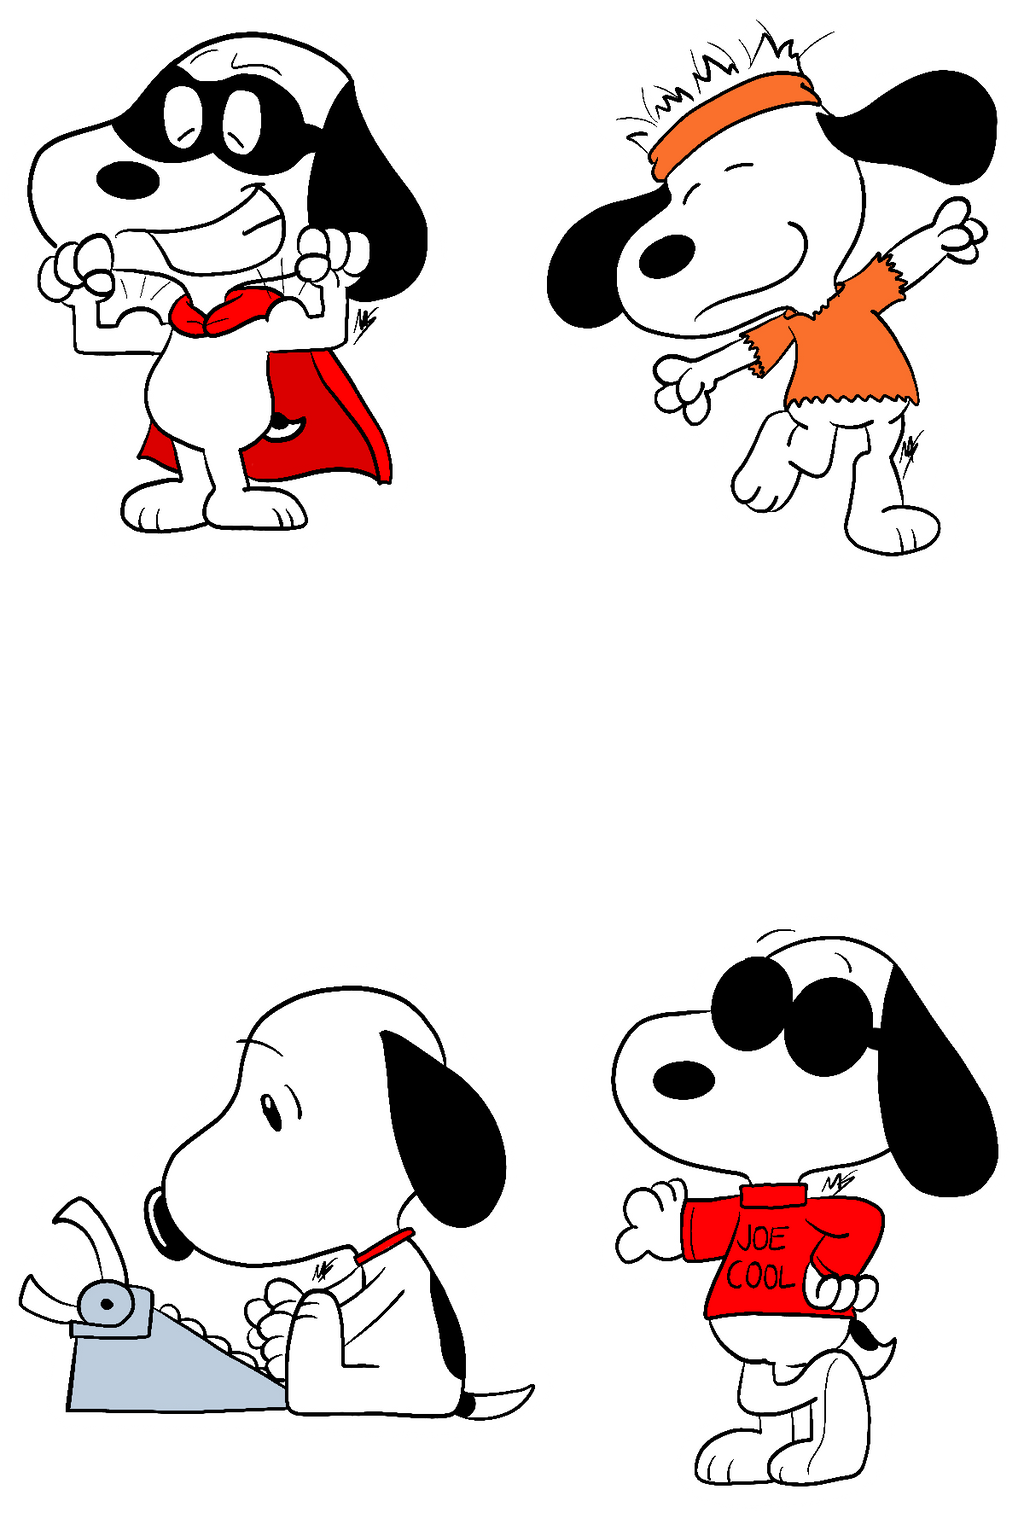 Sticker Buddies (Snoopy Edition) by maizie0201 on DeviantArt